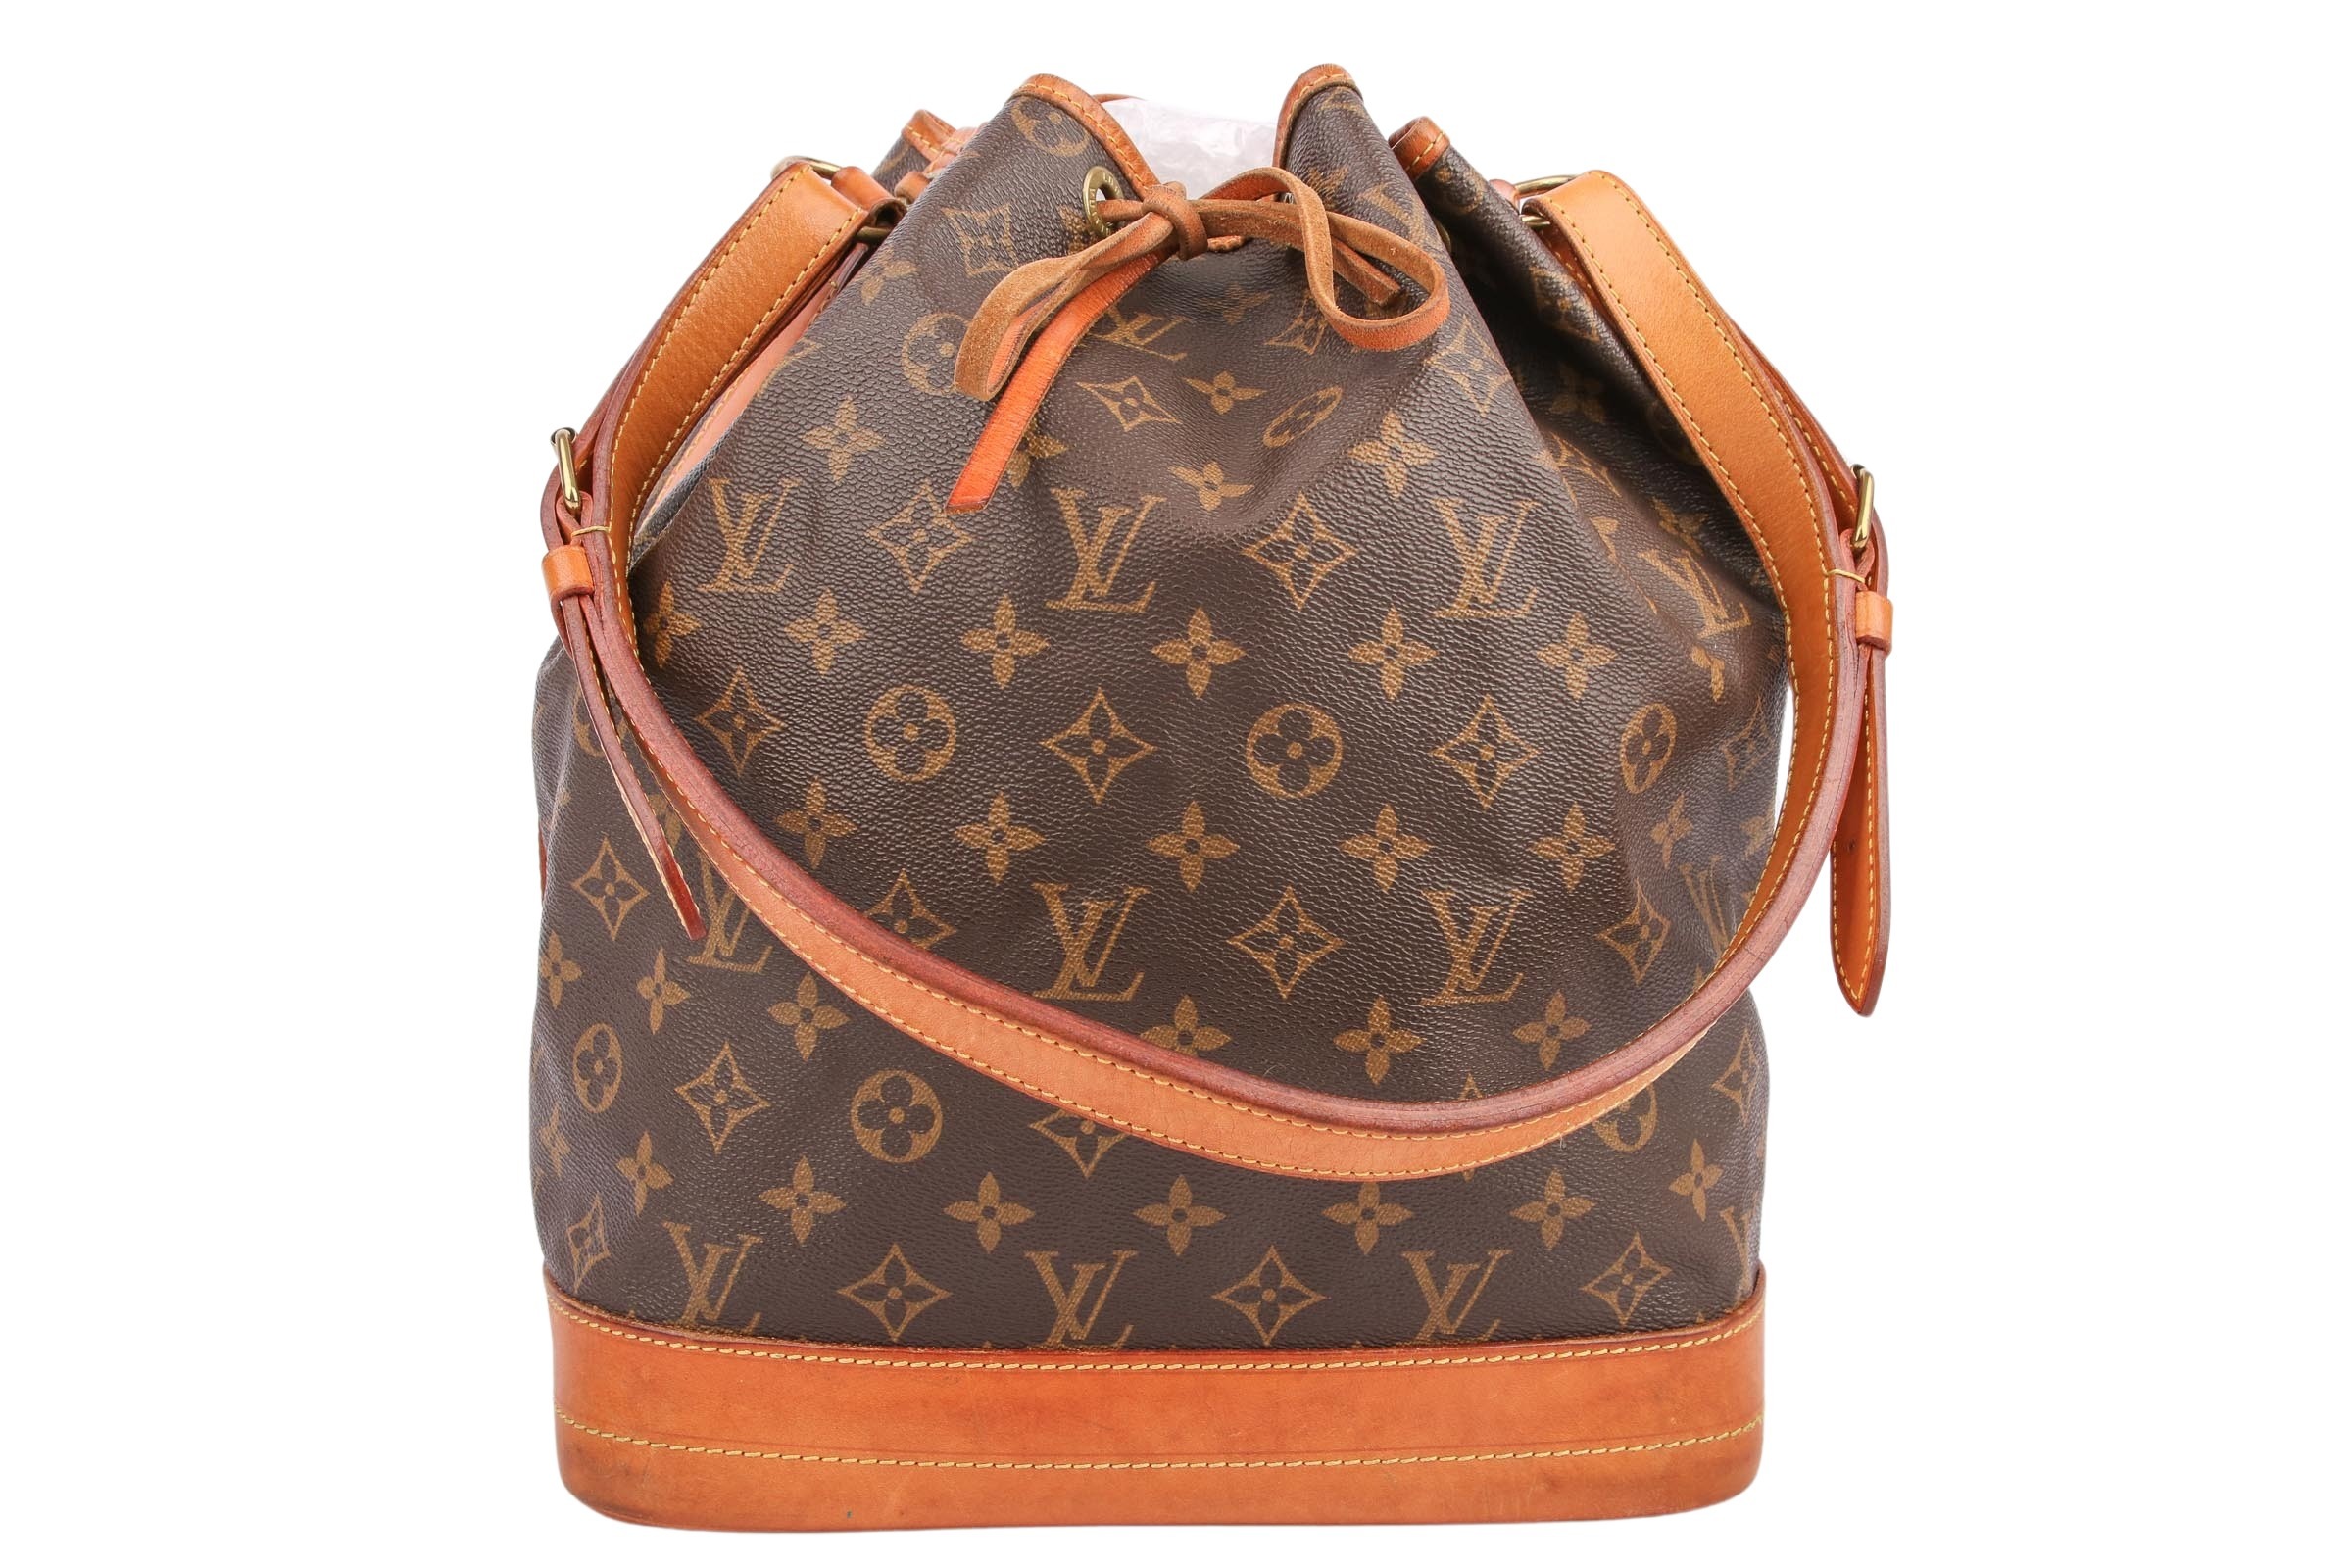 Louis Vuitton Handtaschen & Accessoires